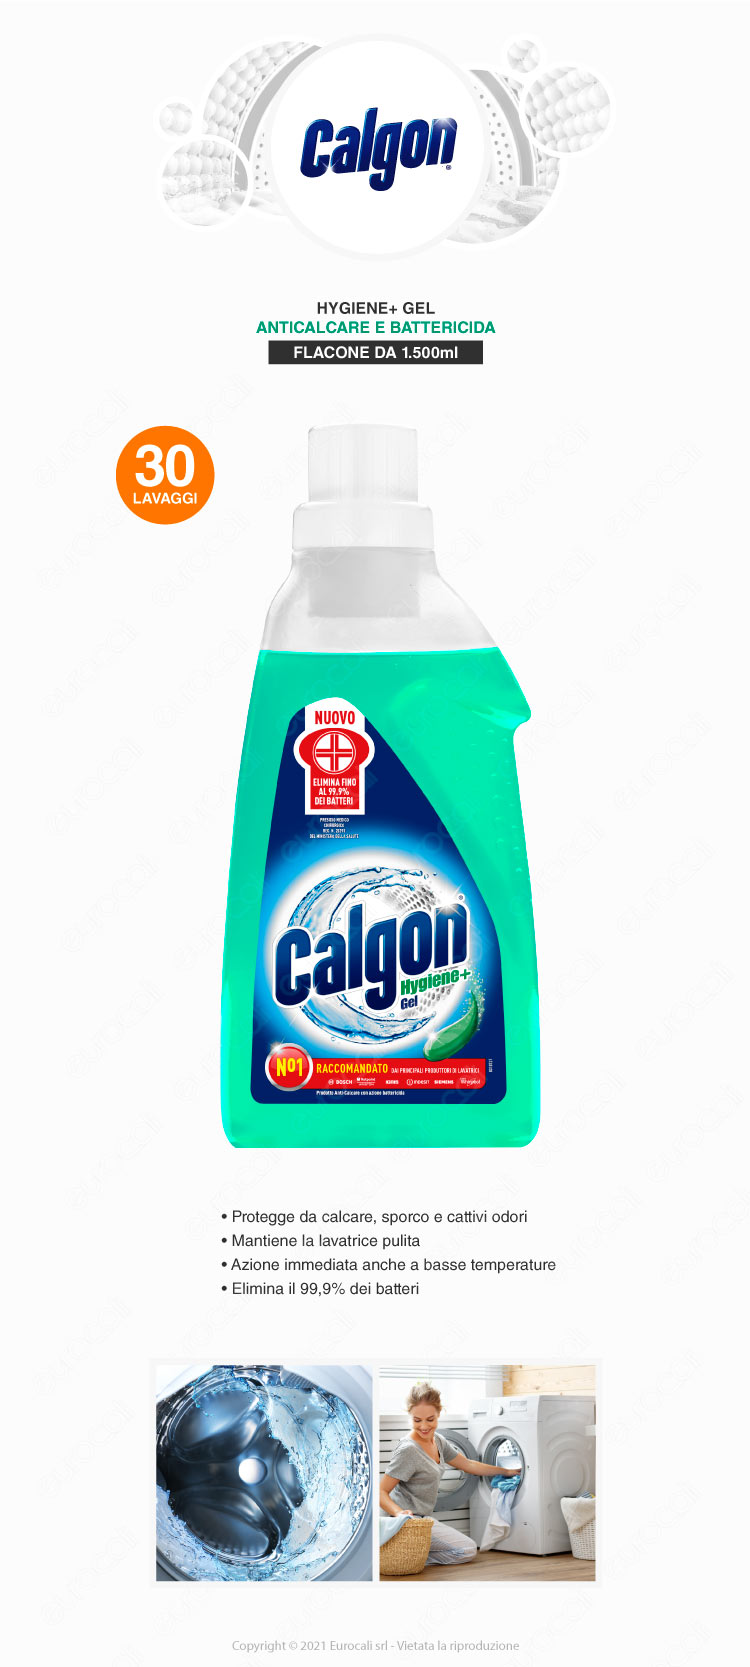 Calgon Hygiene plus gel igenizzante lavatrice 1500ml